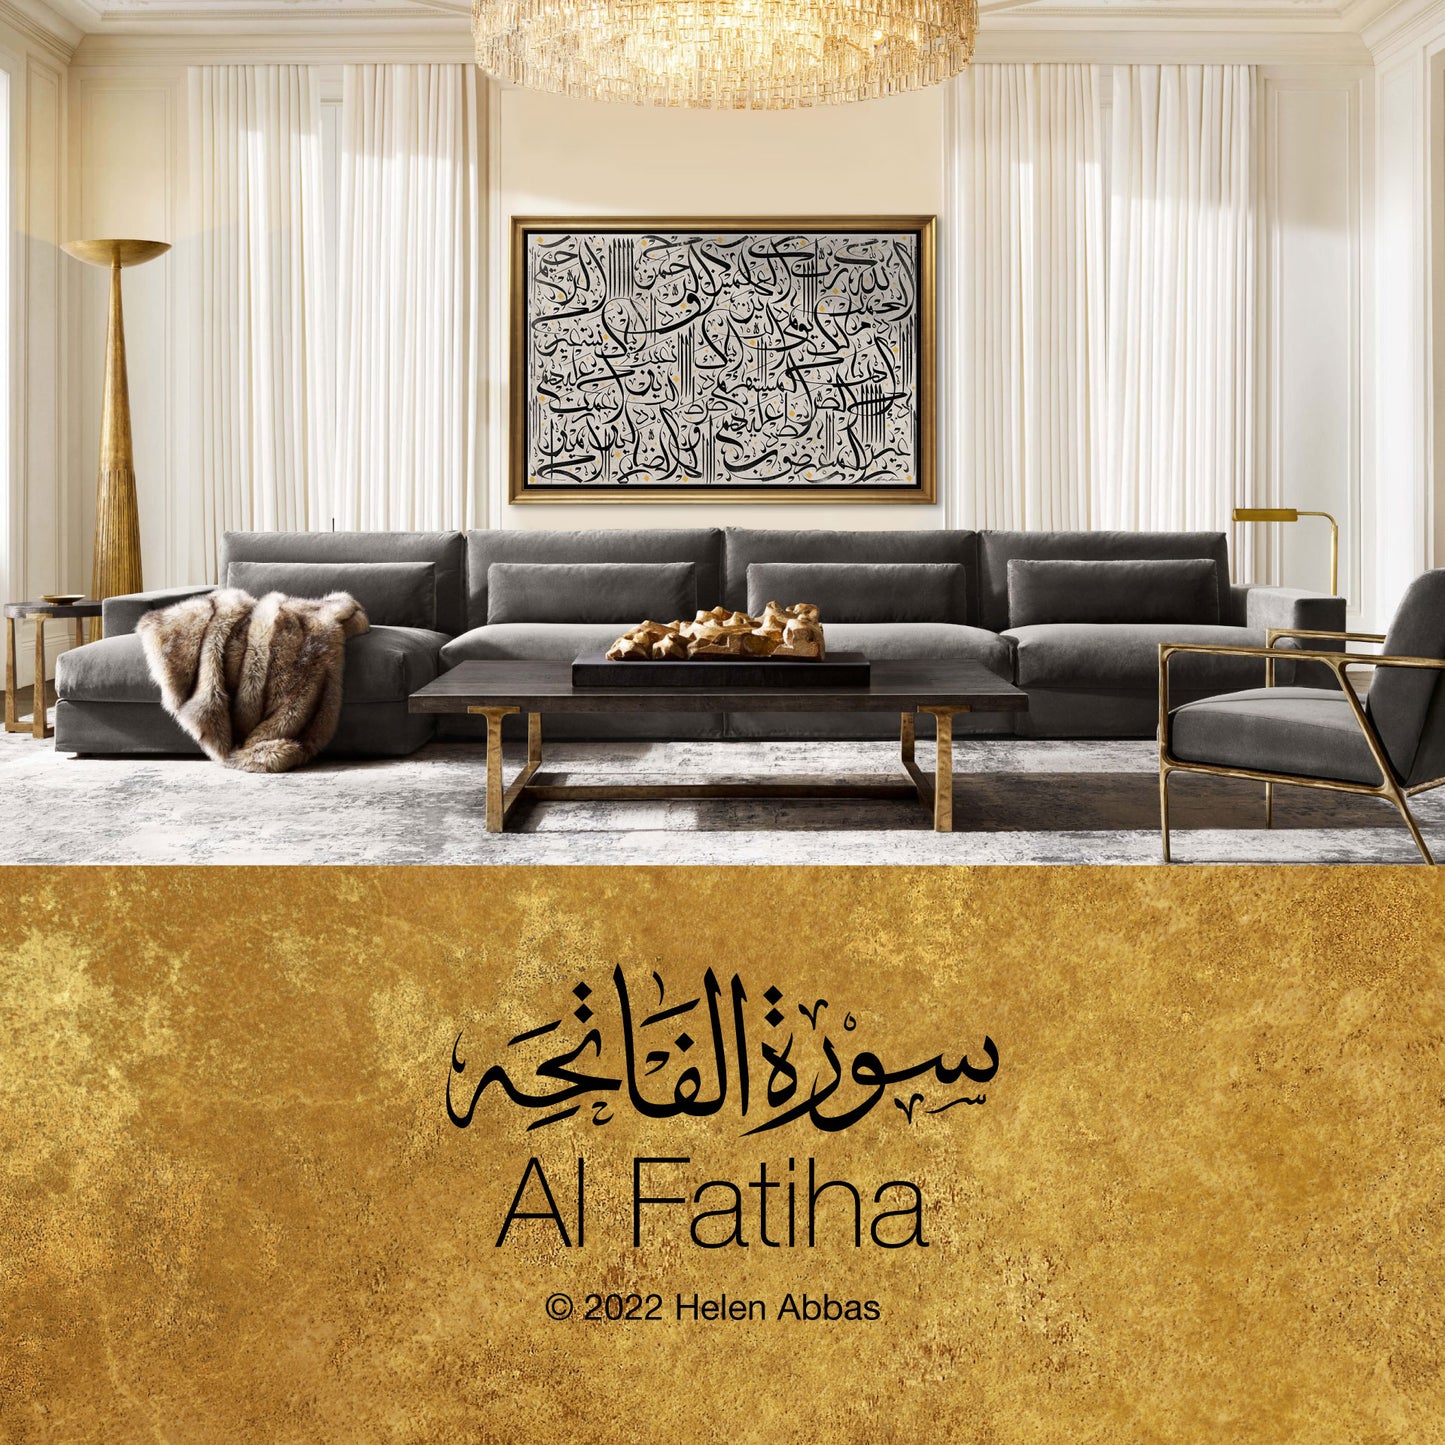 Al Fatiha Quran Islamic Contemporary Modern Arabic Calligraphy Art  by Artist Helen Abbas The Art Gallery Online Canvas Print